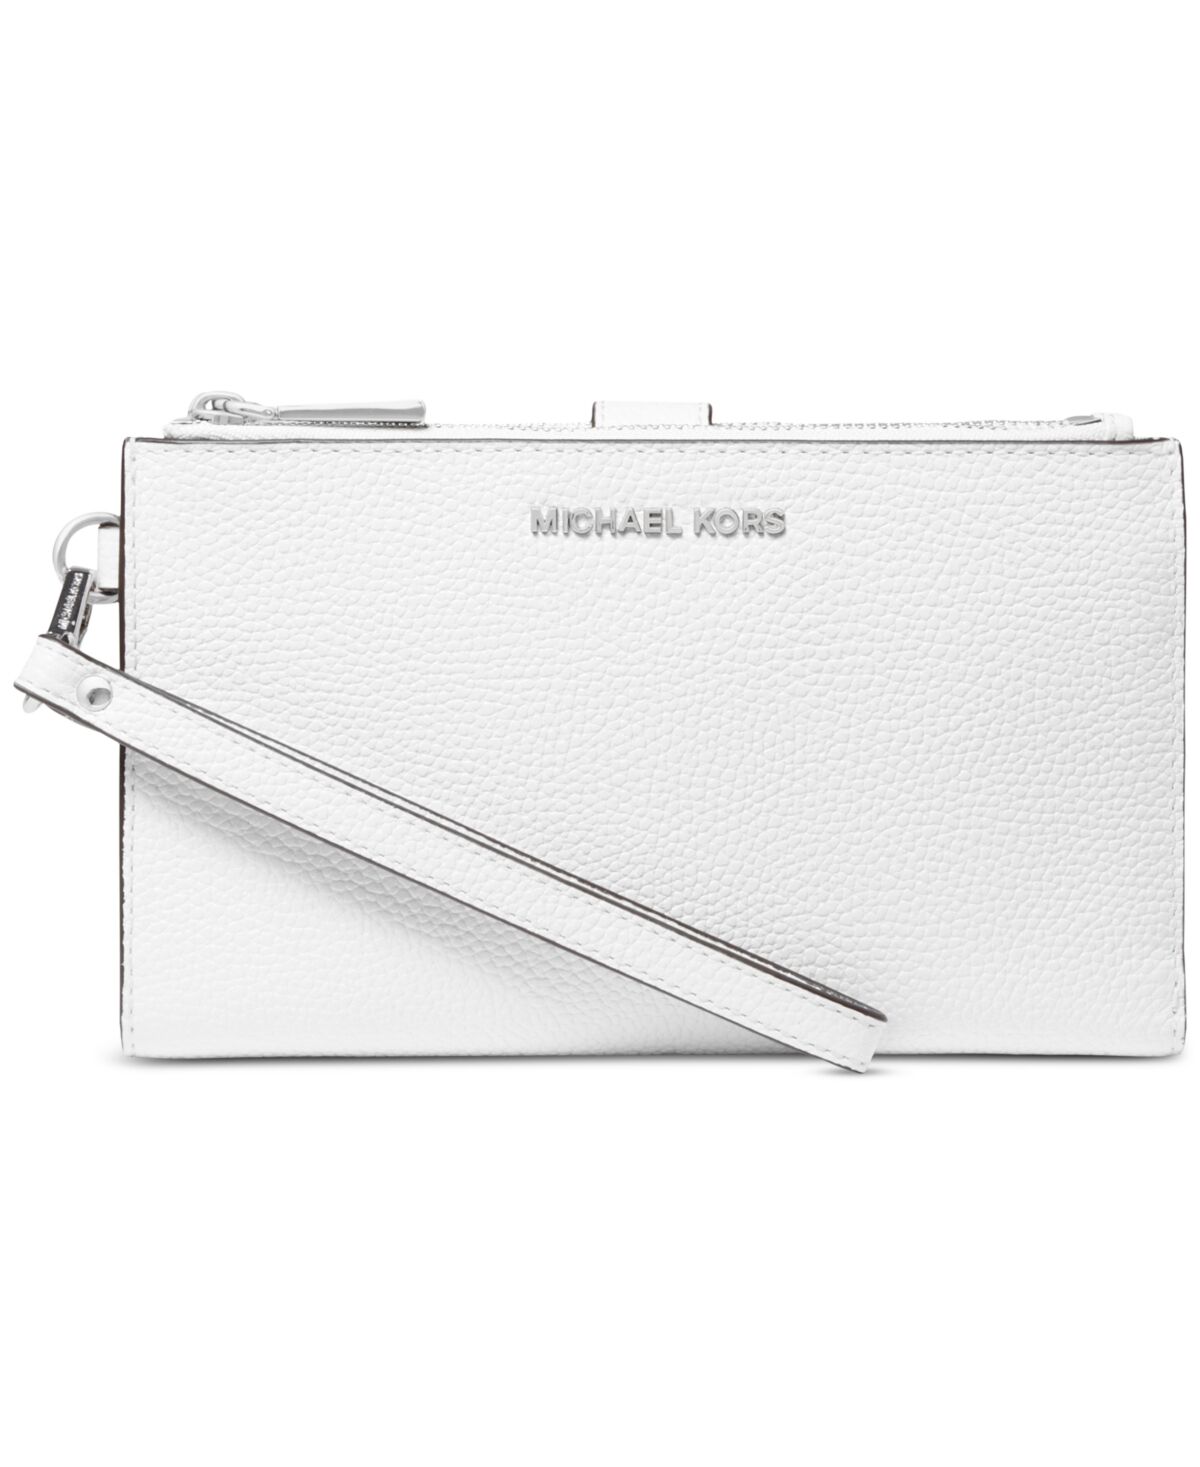 Michael Kors Michael Michael Kors Adele Double Zip iPhone 7 Plus Leather Wristlet - Optic White